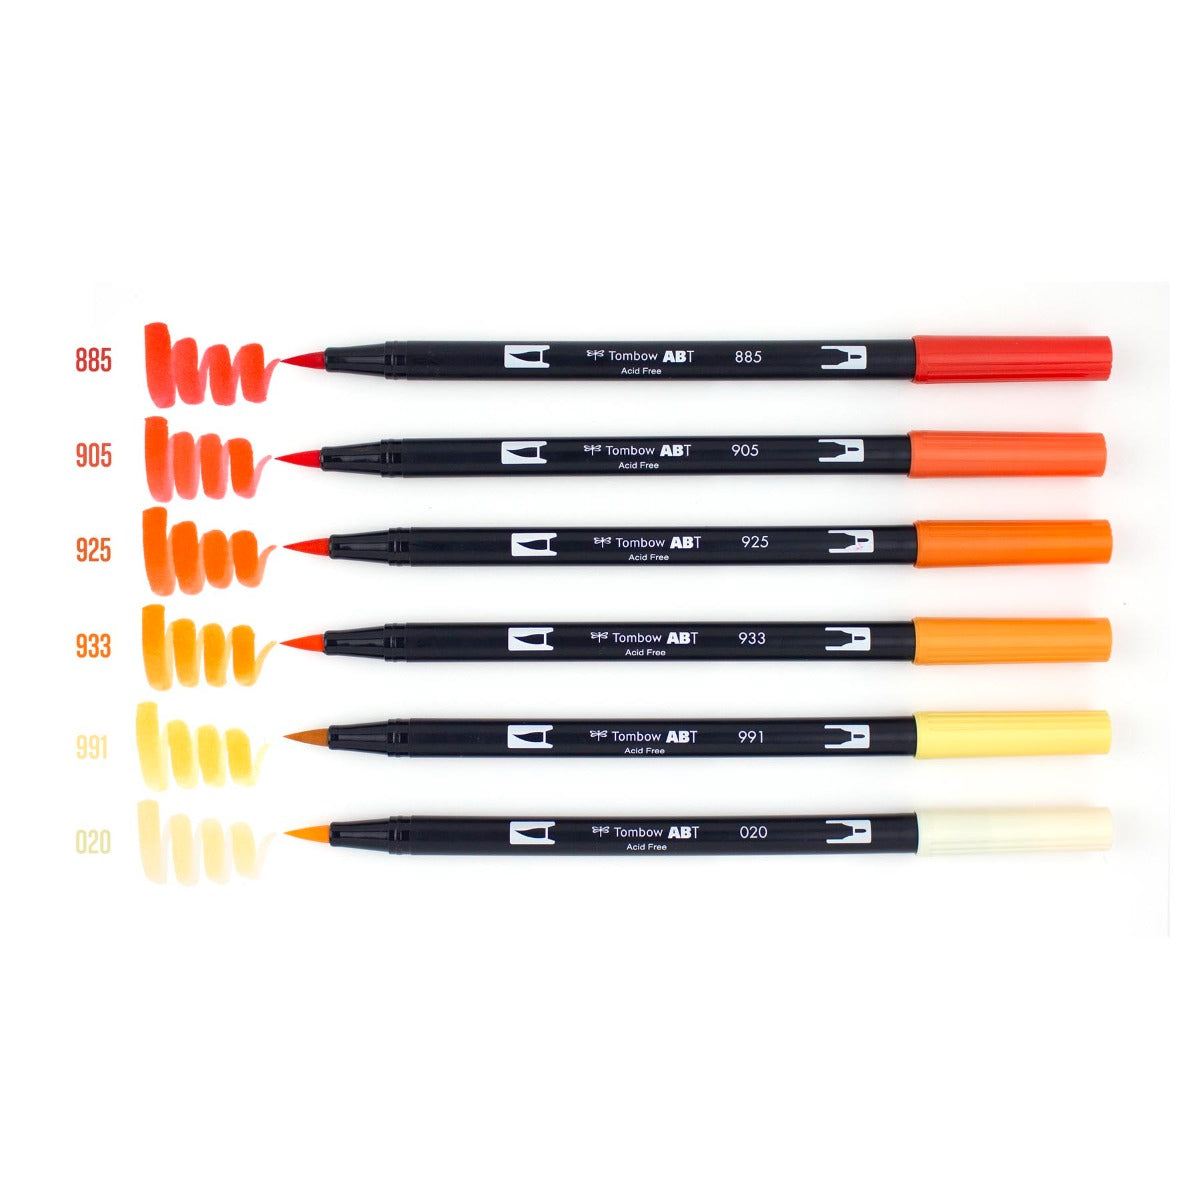 Dual Brush Pen Art Markers, Orange Blendables, 6-Pack